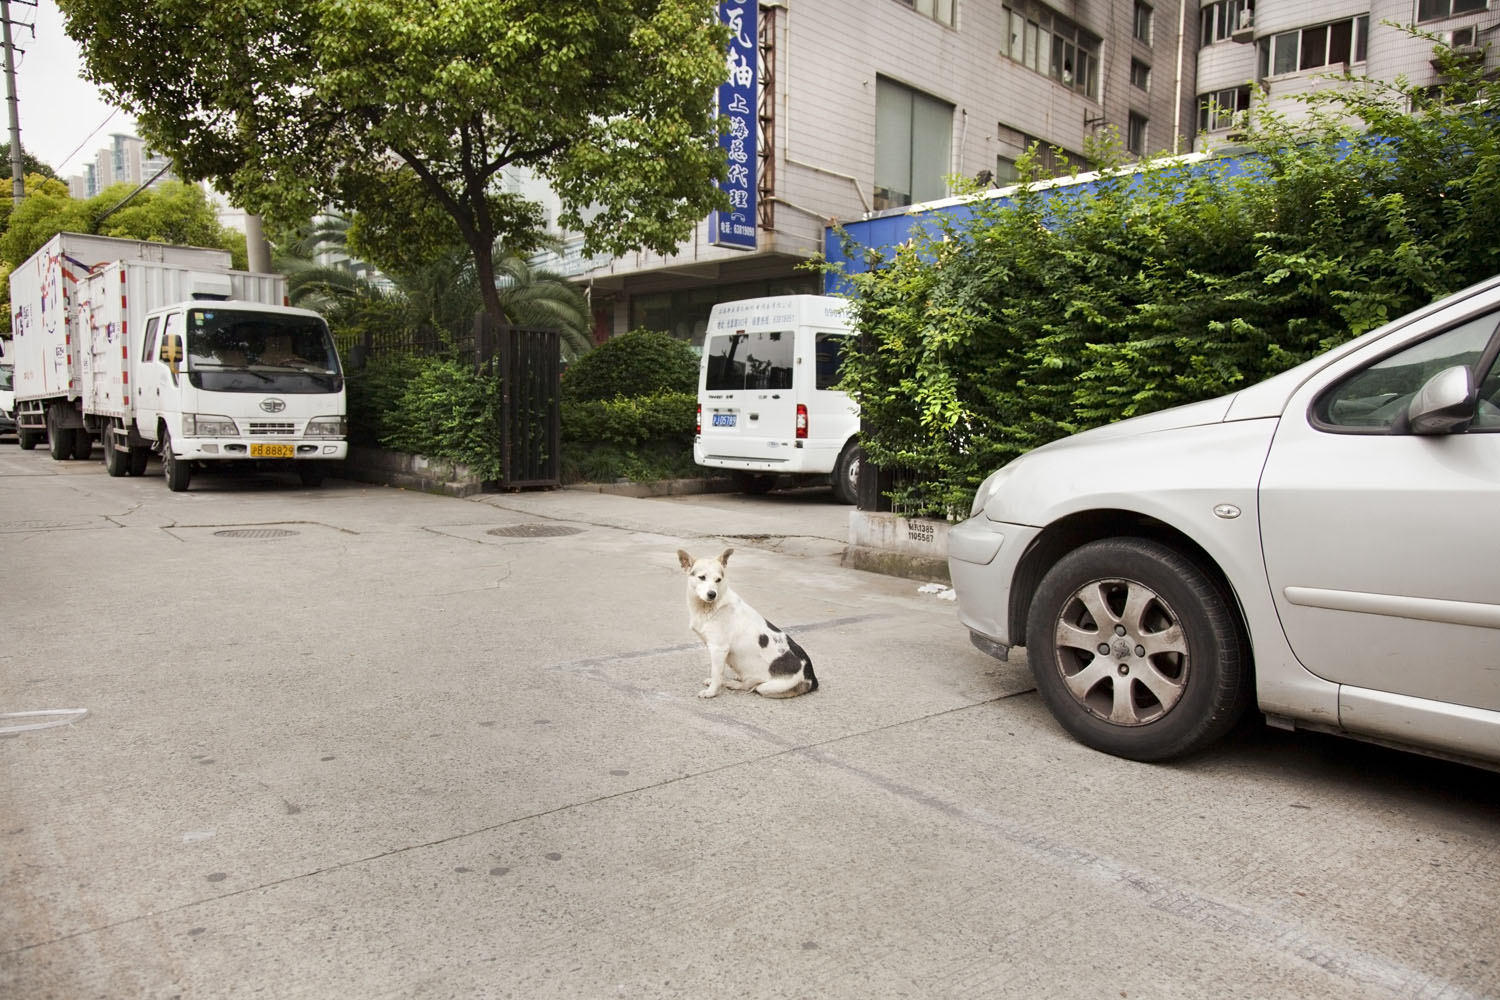 White dog. Shanghai, China. 2012.